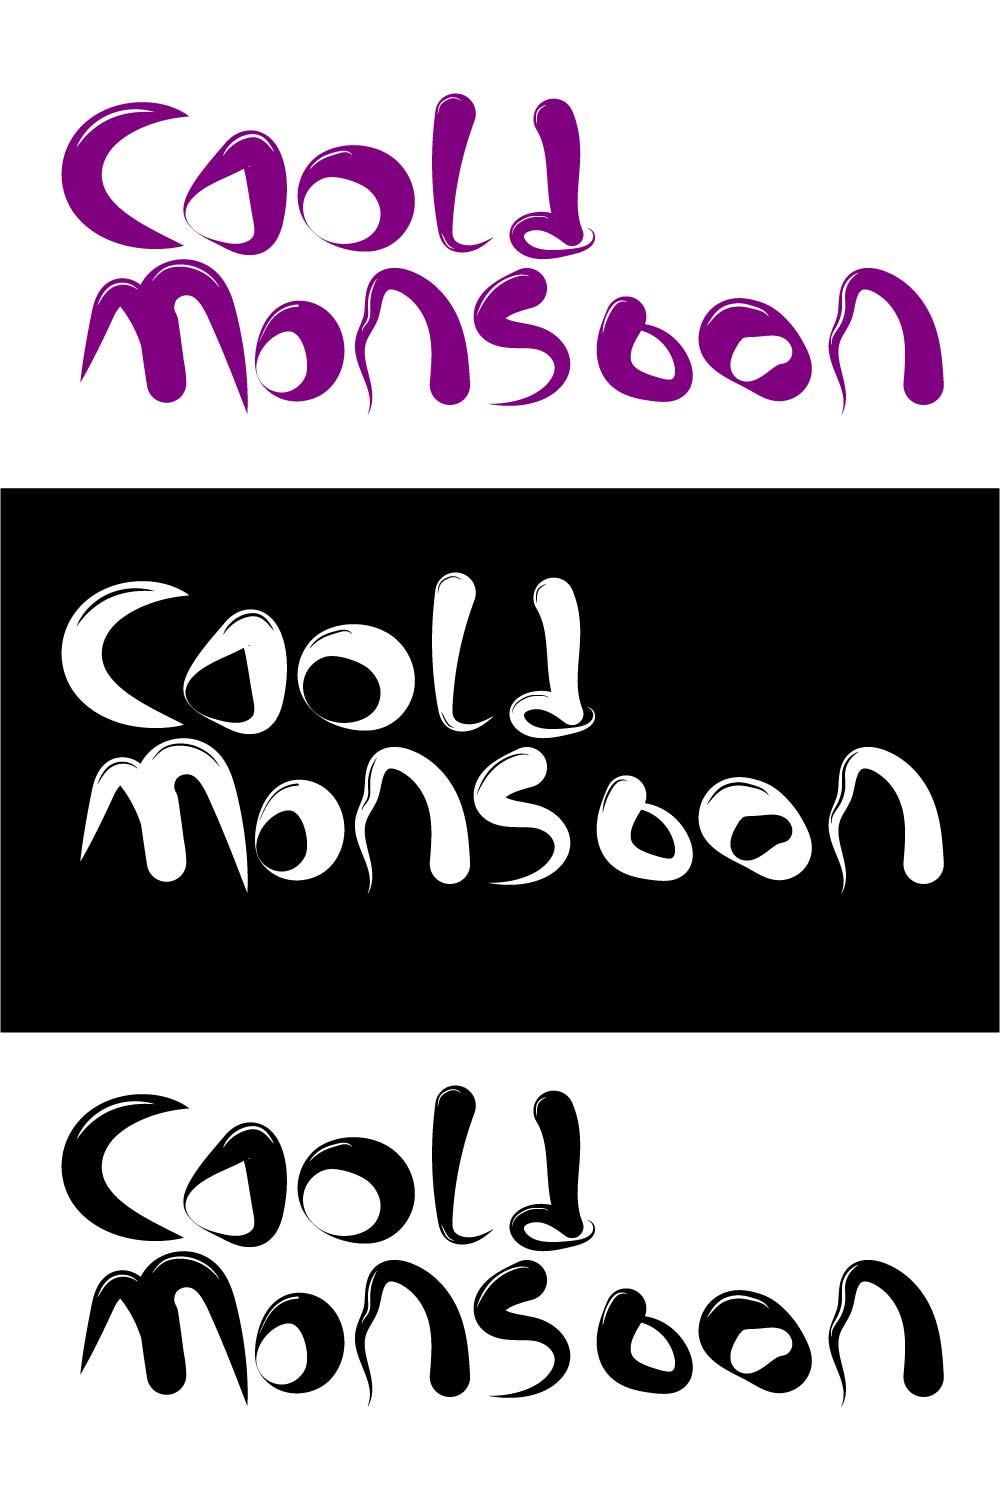 Cold monsoon wordmark logo pinterest preview image.